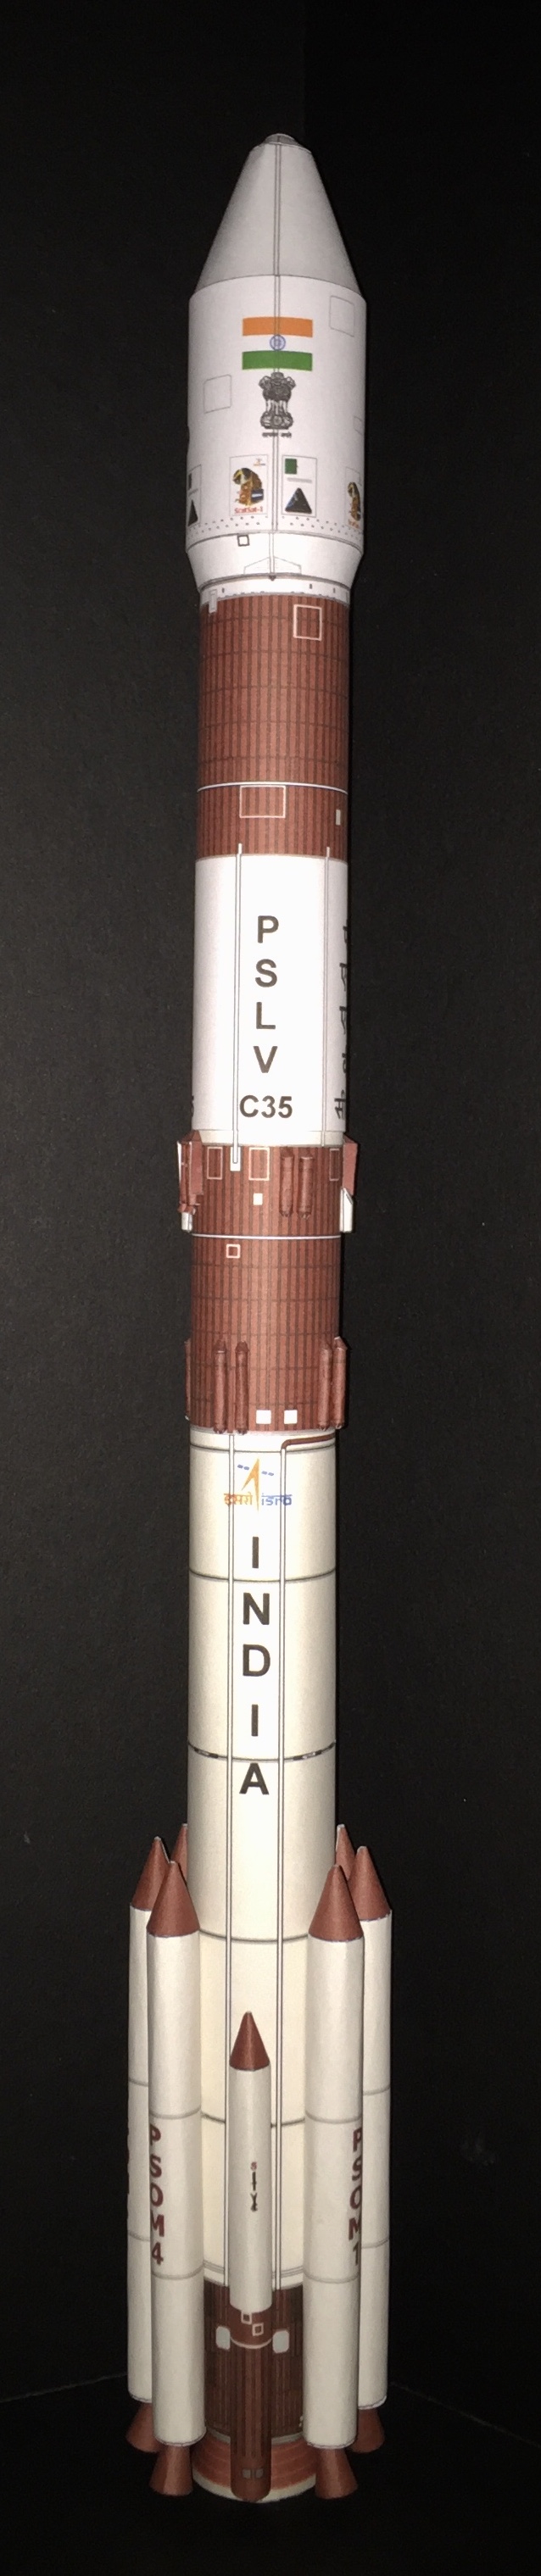 PSLV C35-image